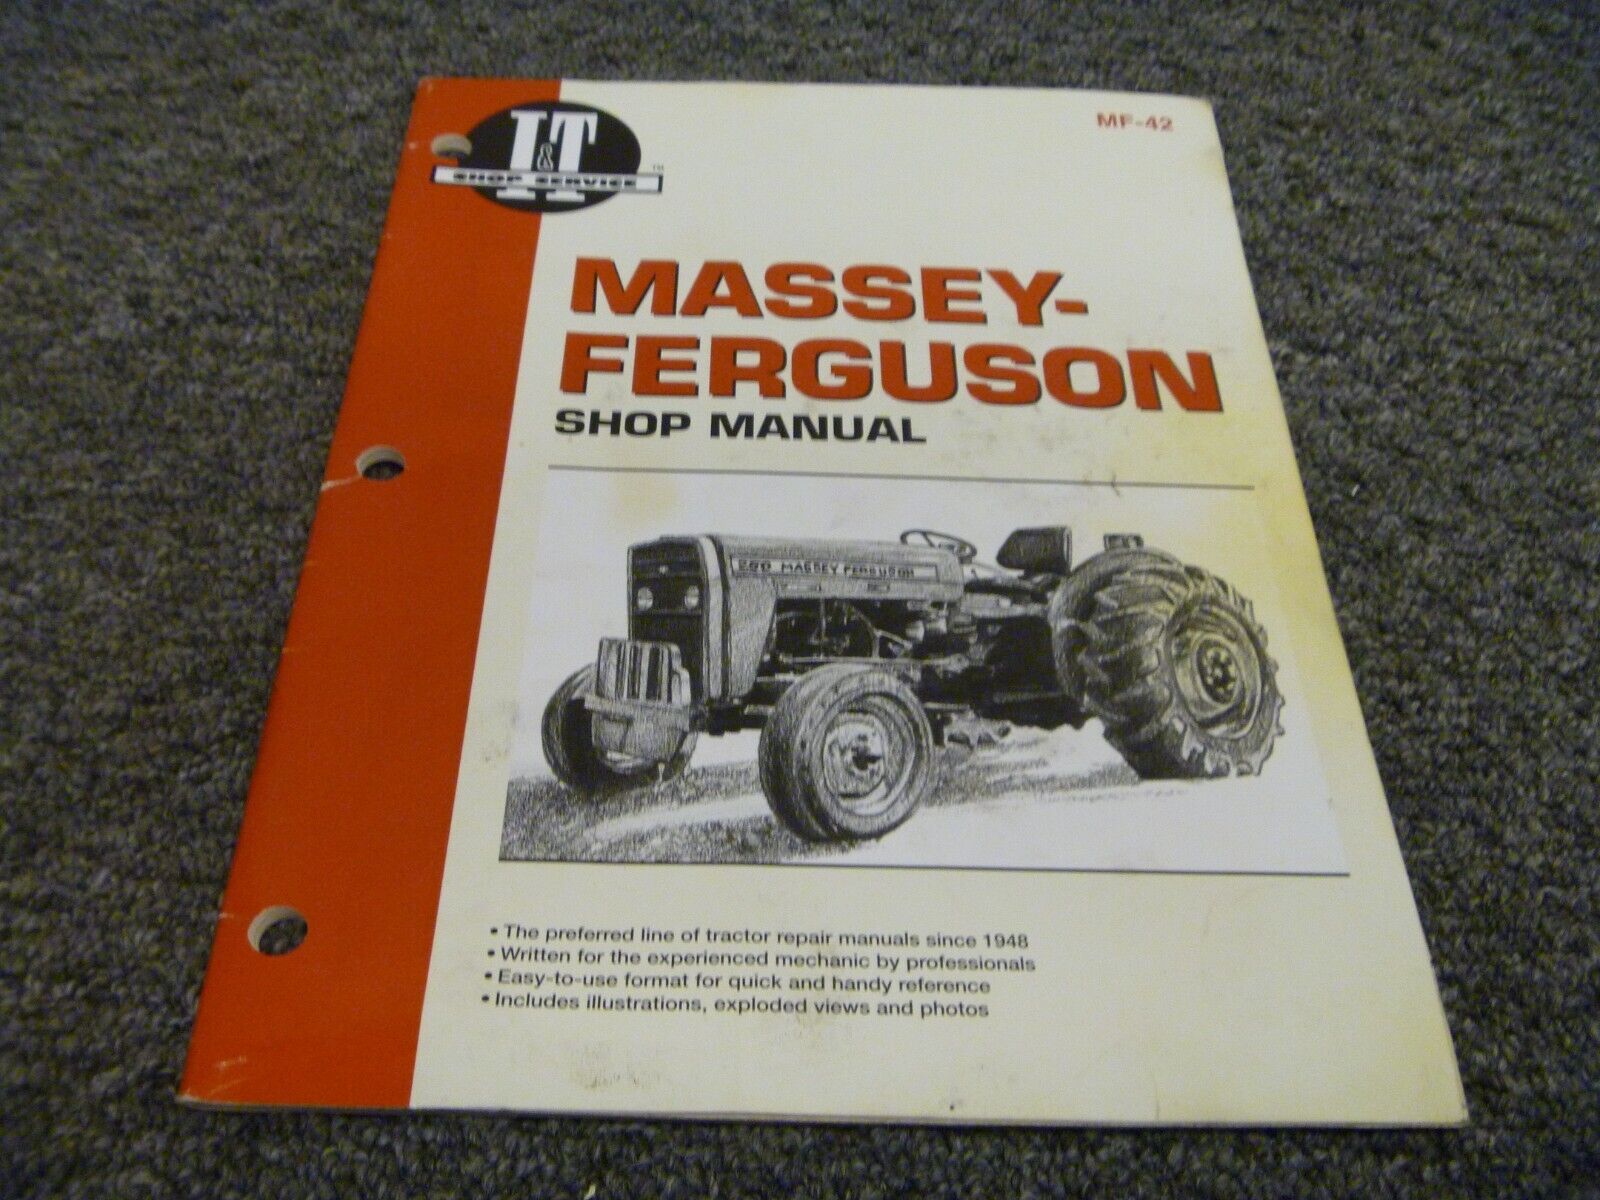 I&T Massey-Ferguson 230 235 240 245 250 Tractor Shop Service Repair Manual MF-42